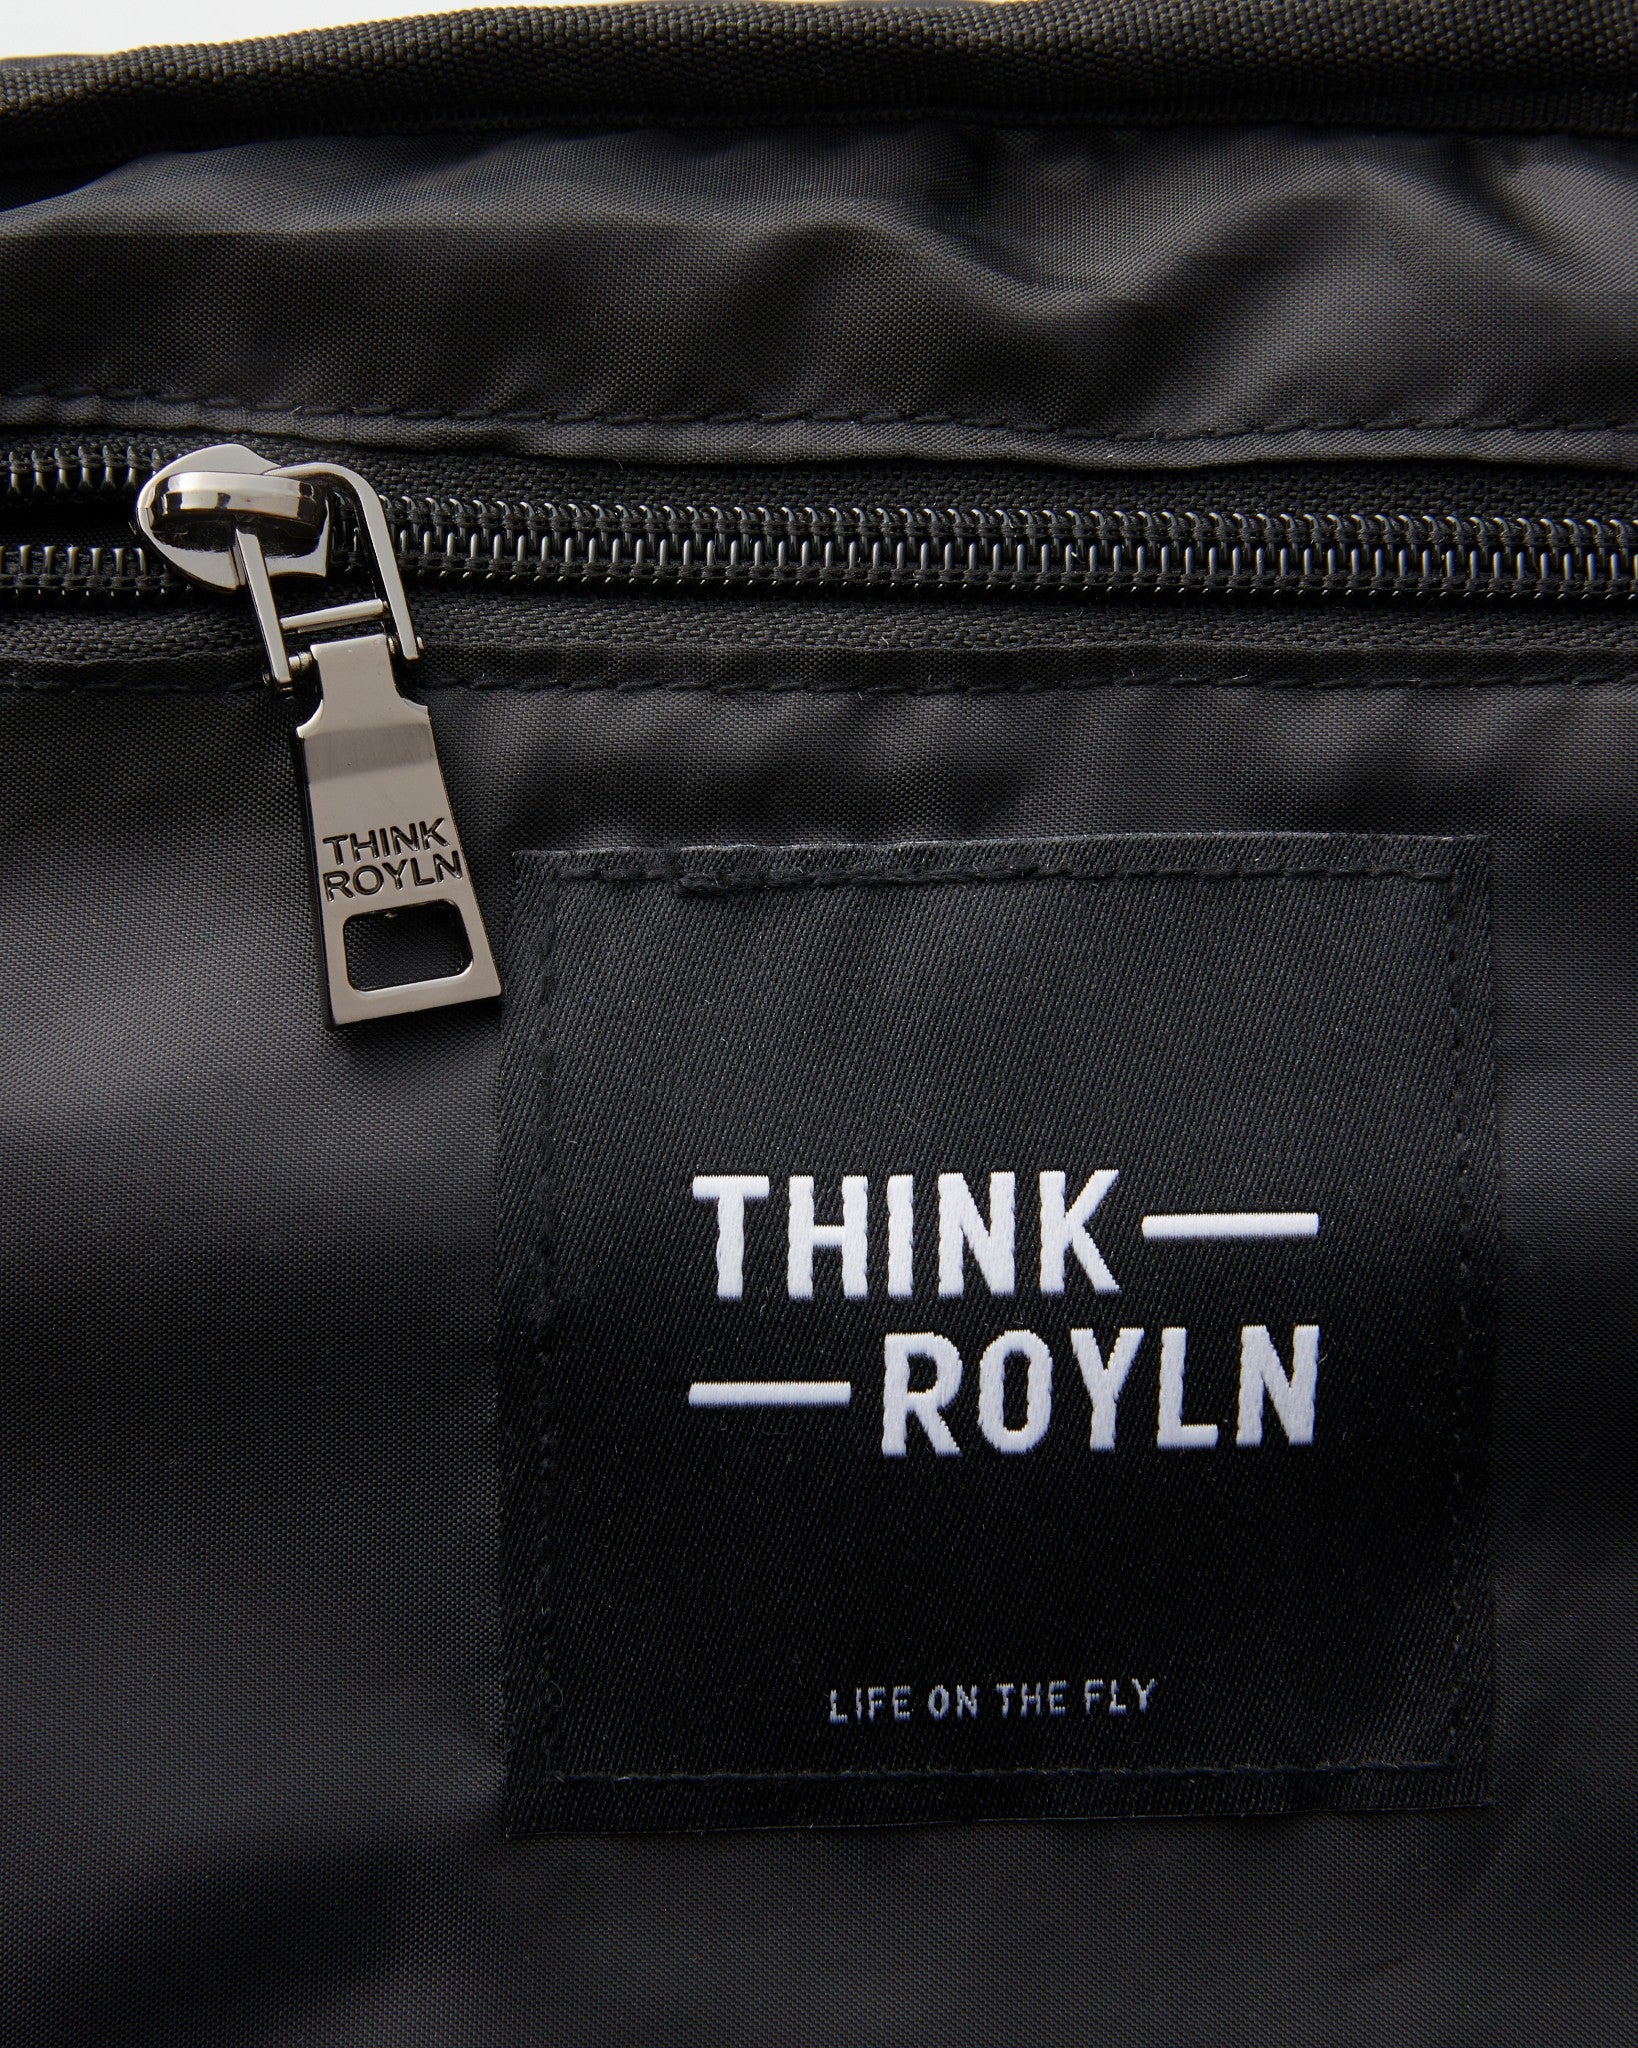 New Bag Brand Alert: Think Royln